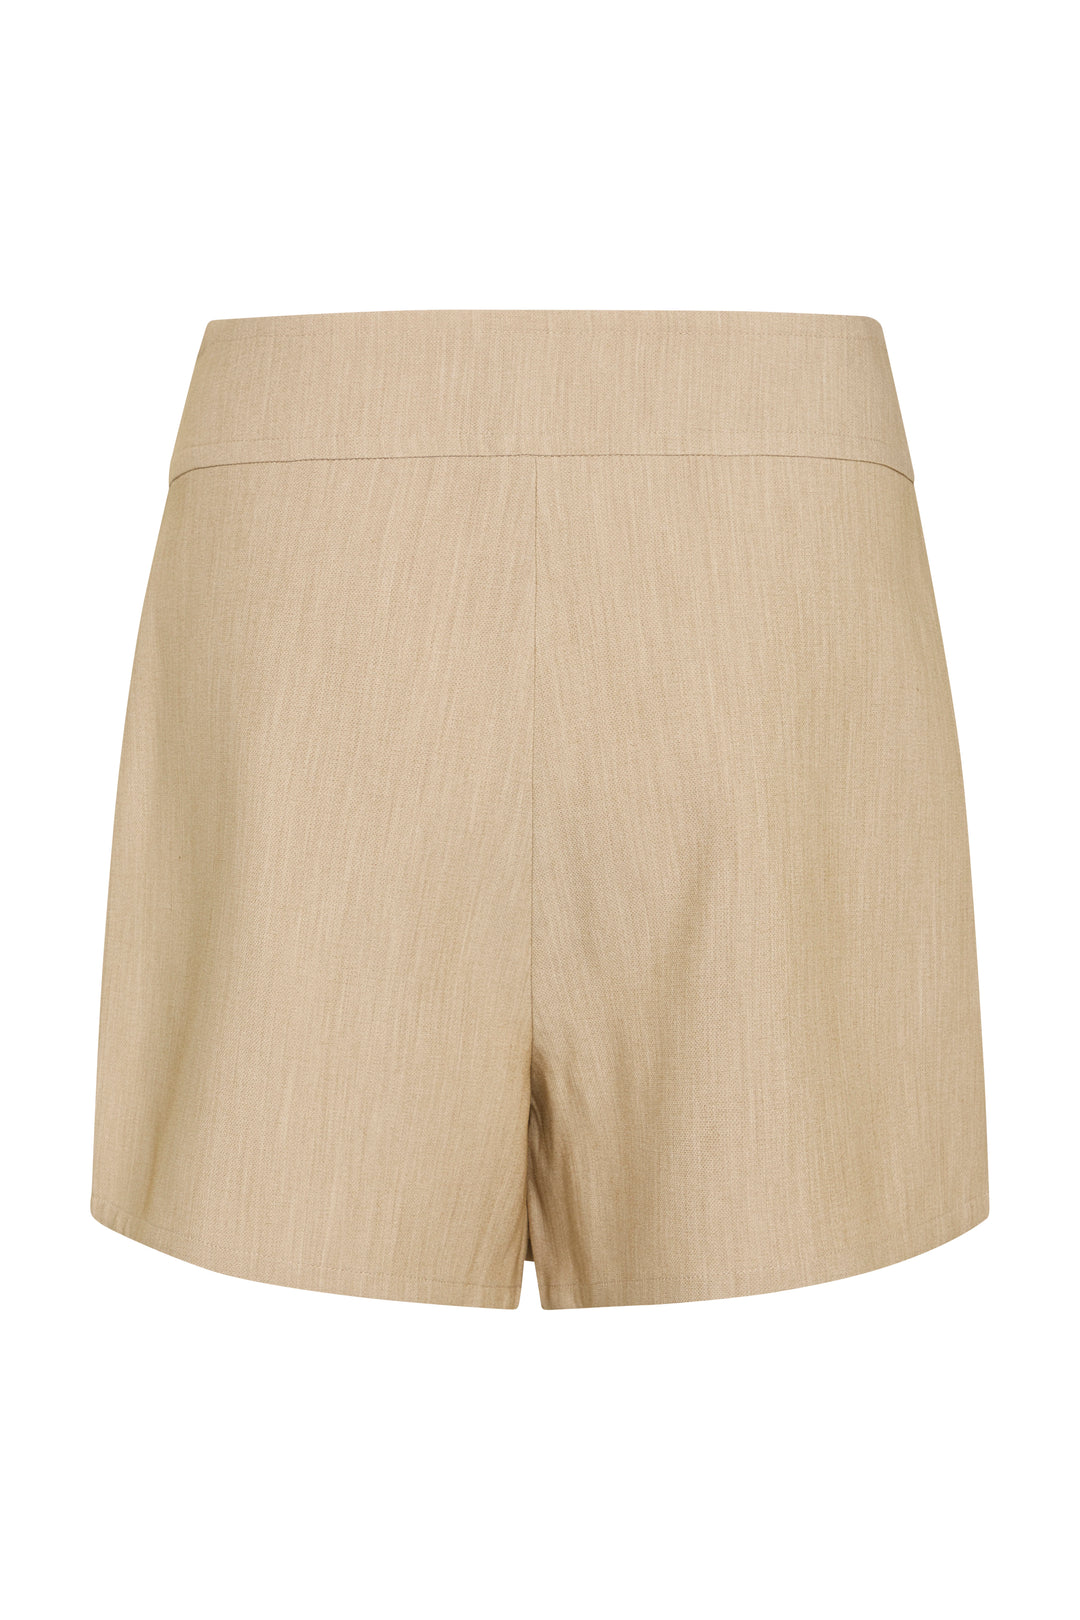 Bruuns Bazaar Women CindySusBBElica skirt/shorts Skirt Beige Melange